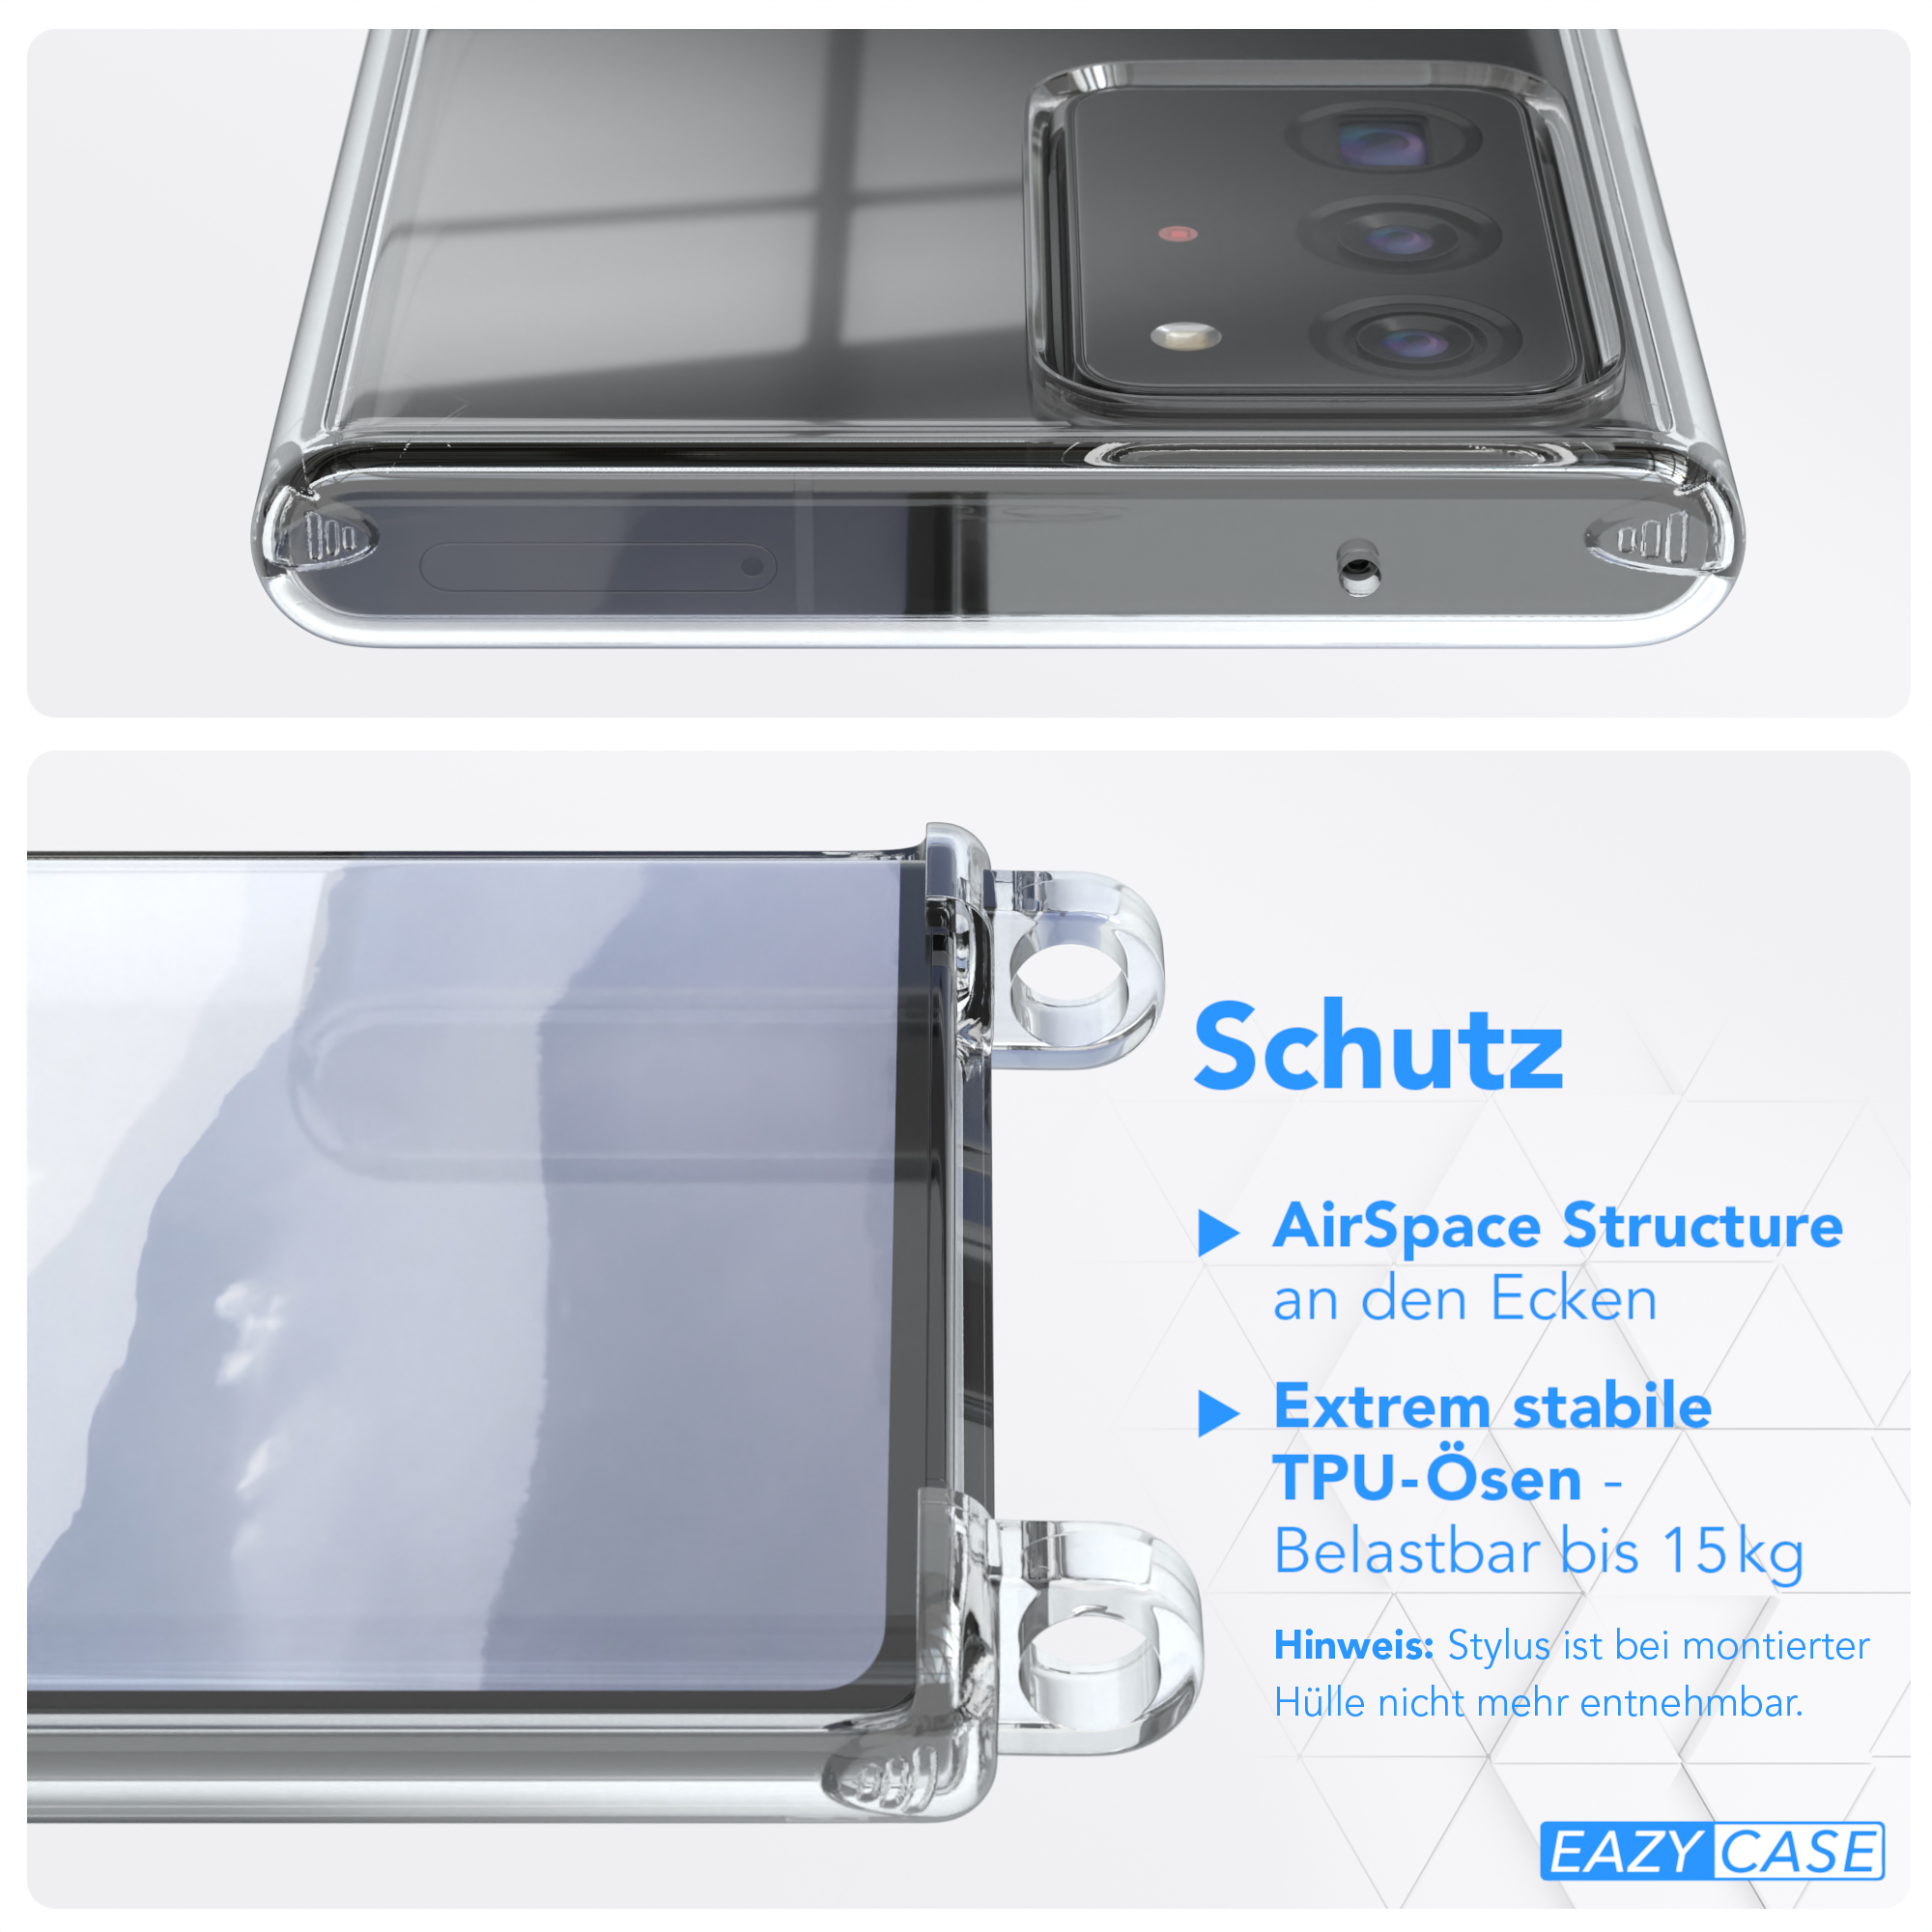 mit Samsung, 5G, Ultra Umhängetasche, Galaxy Clear Ultra CASE 20 Umhängeband, Note EAZY Note / Cover 20 Blau